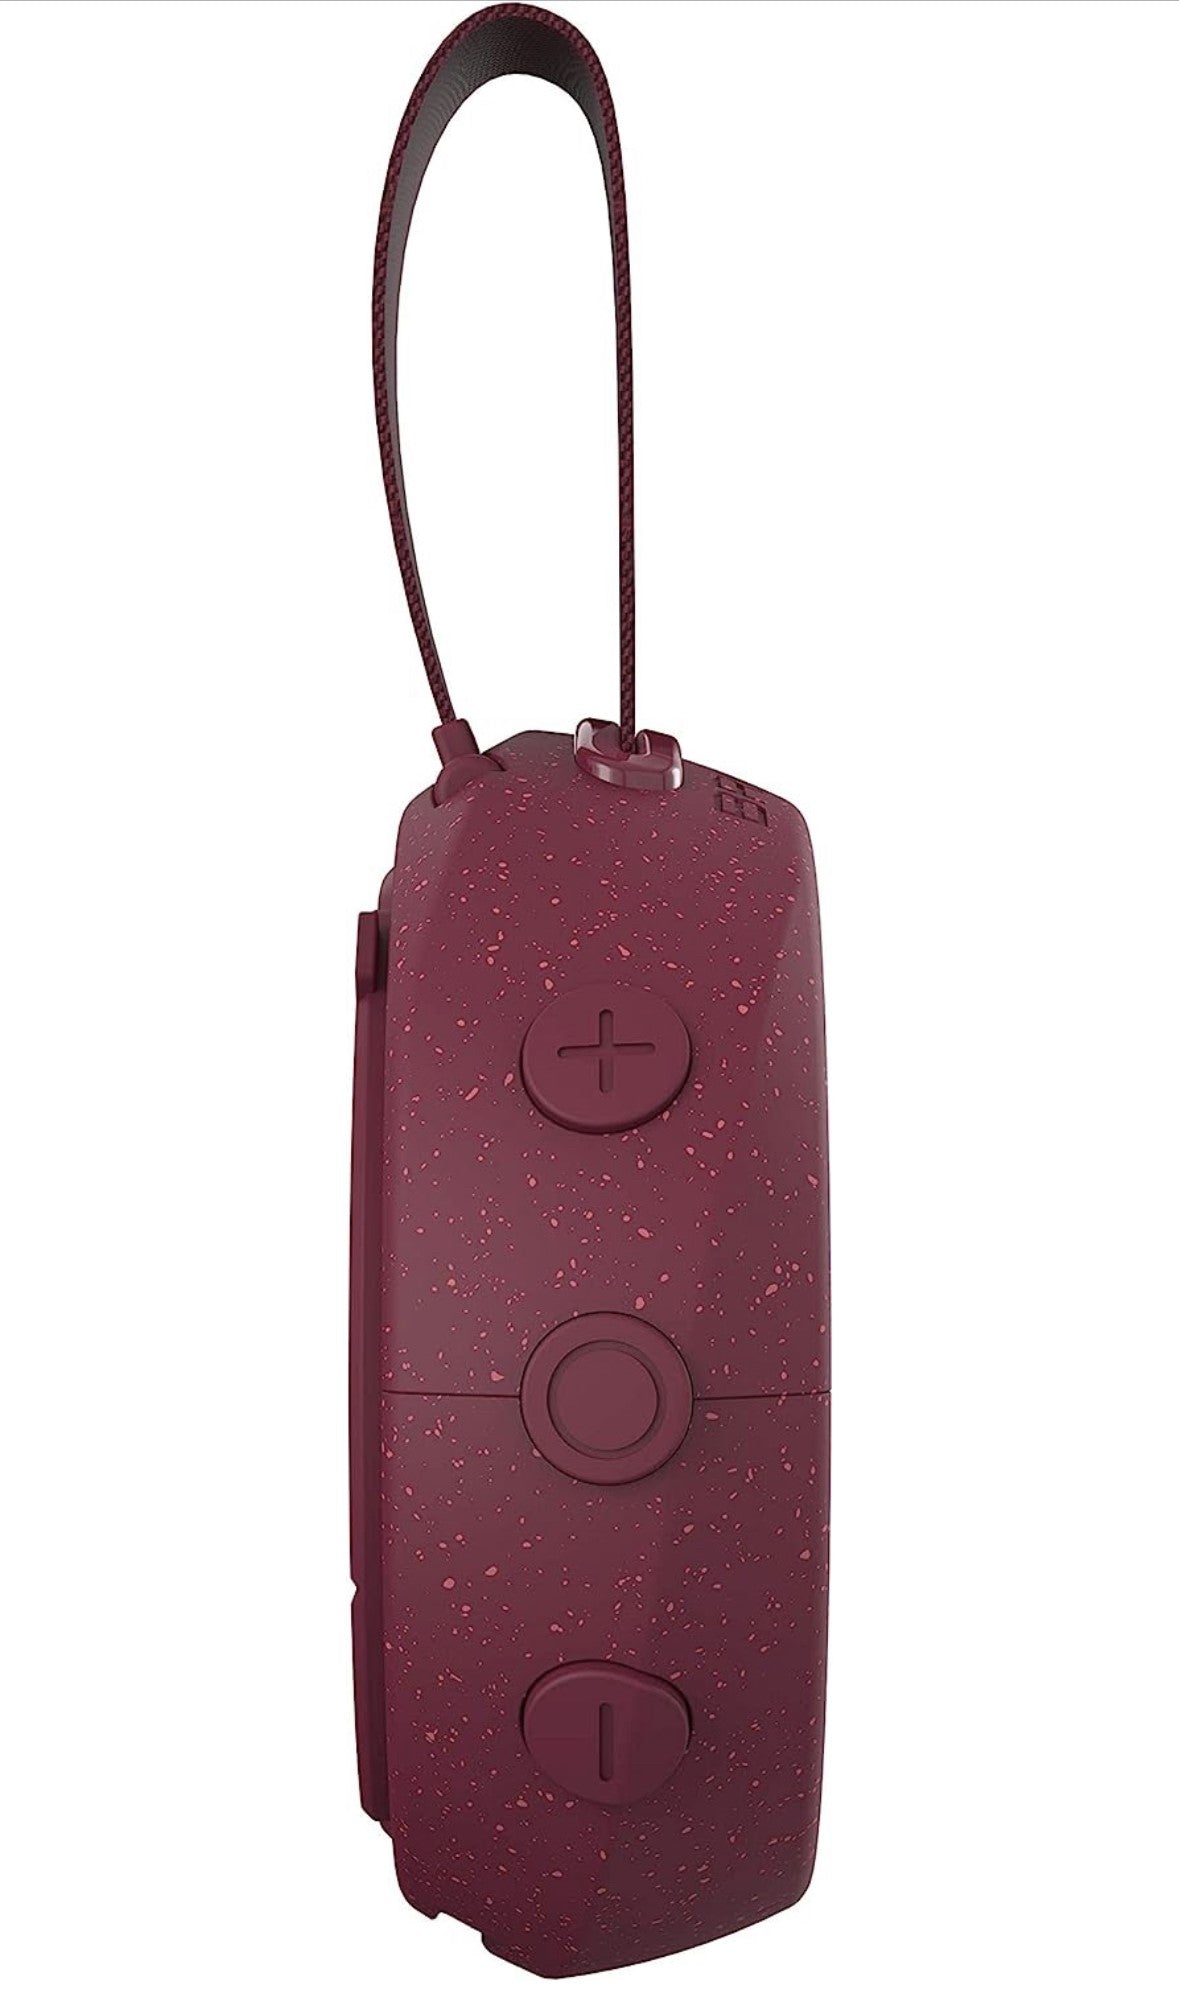 Braven Waterproof Rugged Portable Bluetooth Speaker - Red